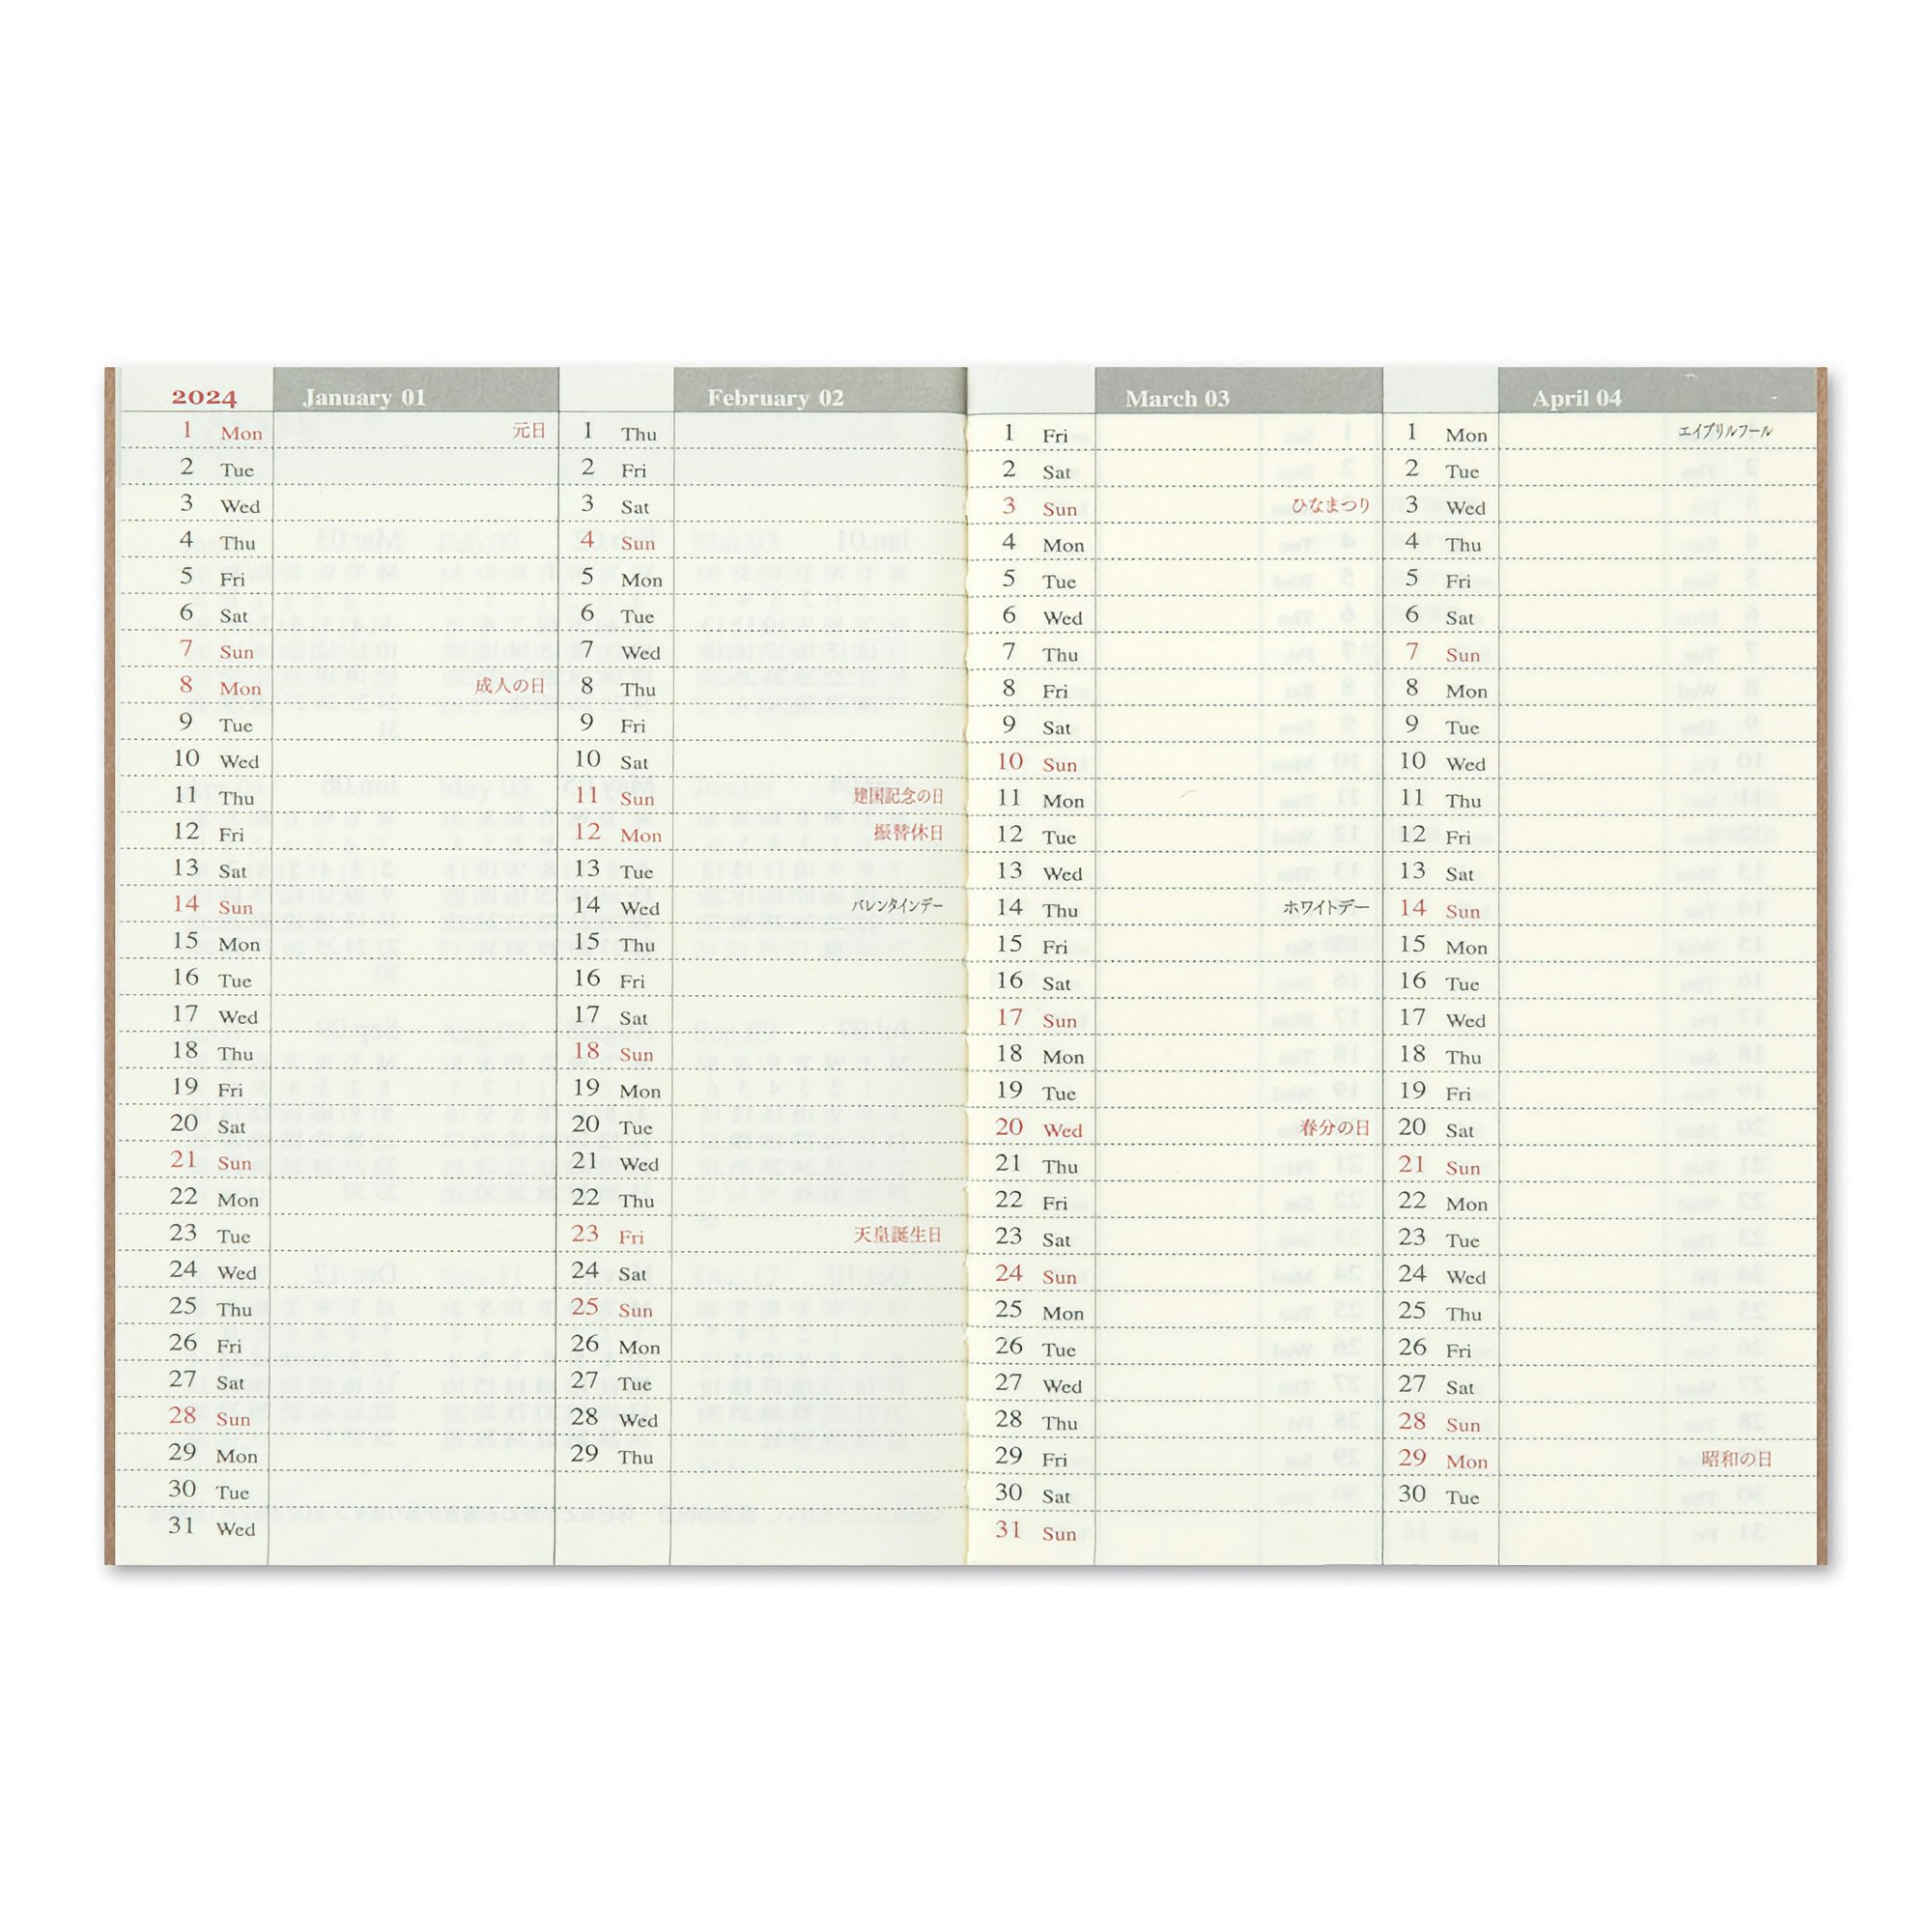 Traveler’s Company Traveler's notebook - 2024 Weekly, Passport Size